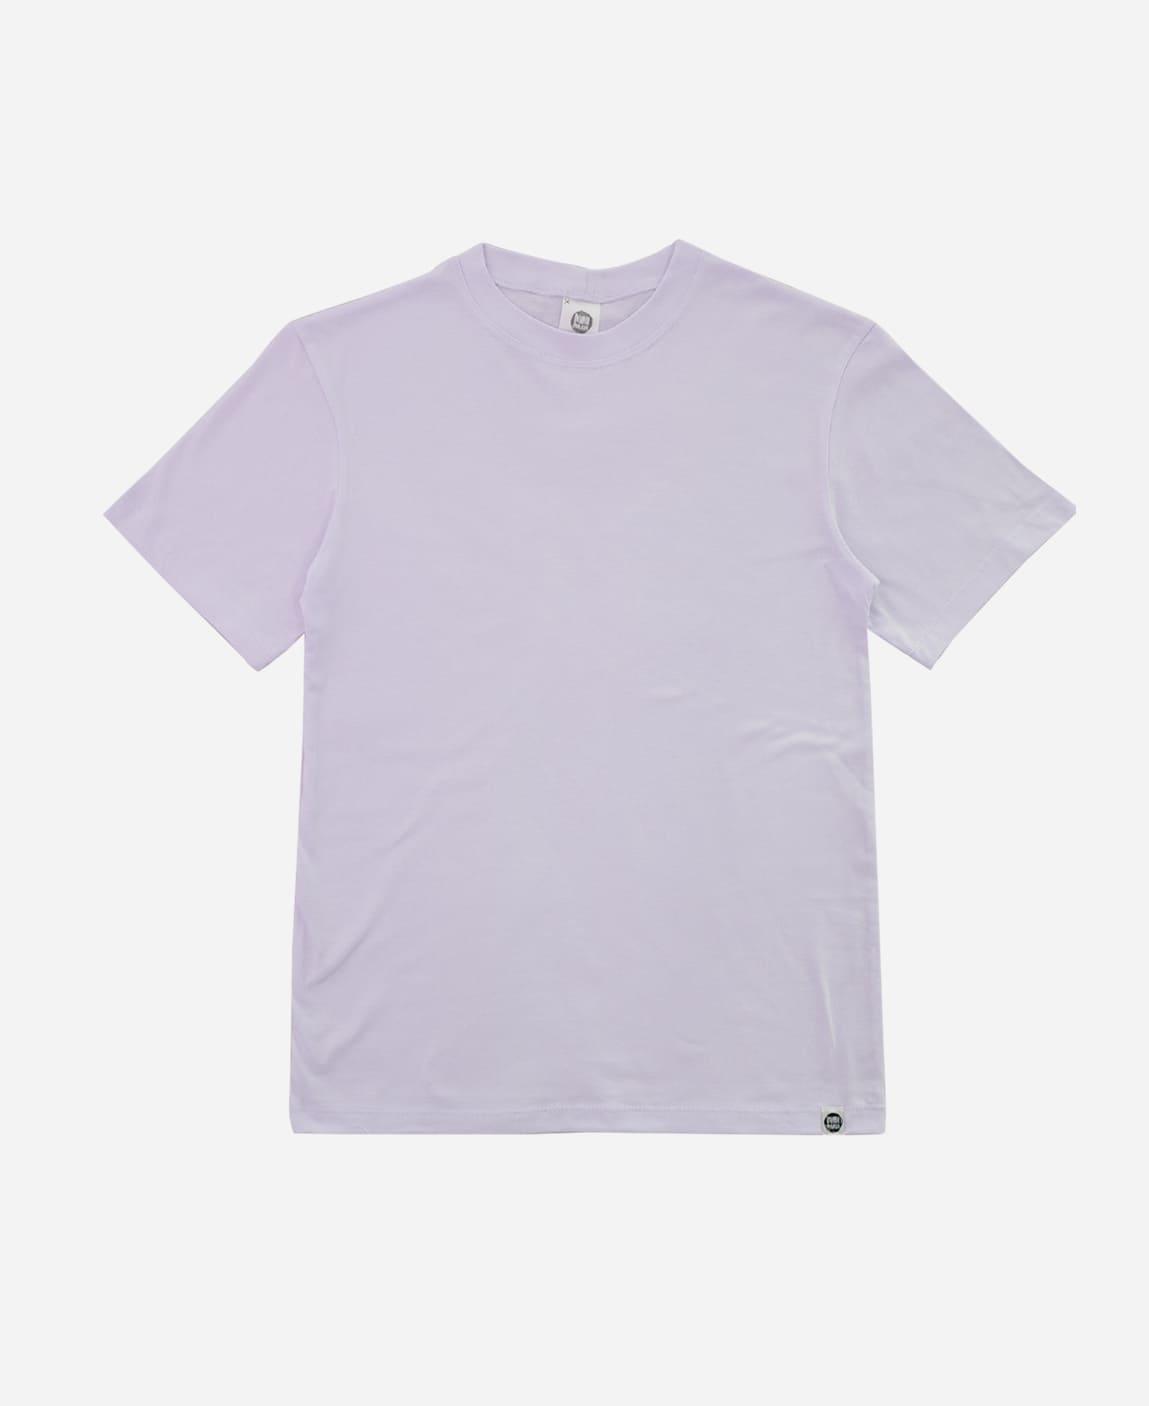 Camiseta Adulto Unissex Liso Lilac - MiniMalista Baby - b2b, com-desconto-mm10, Meia Estação, Menina, minime, Neutro, new, tab-tam-cam-adulto-2, Unissex -bebê-minimalista-estiloso